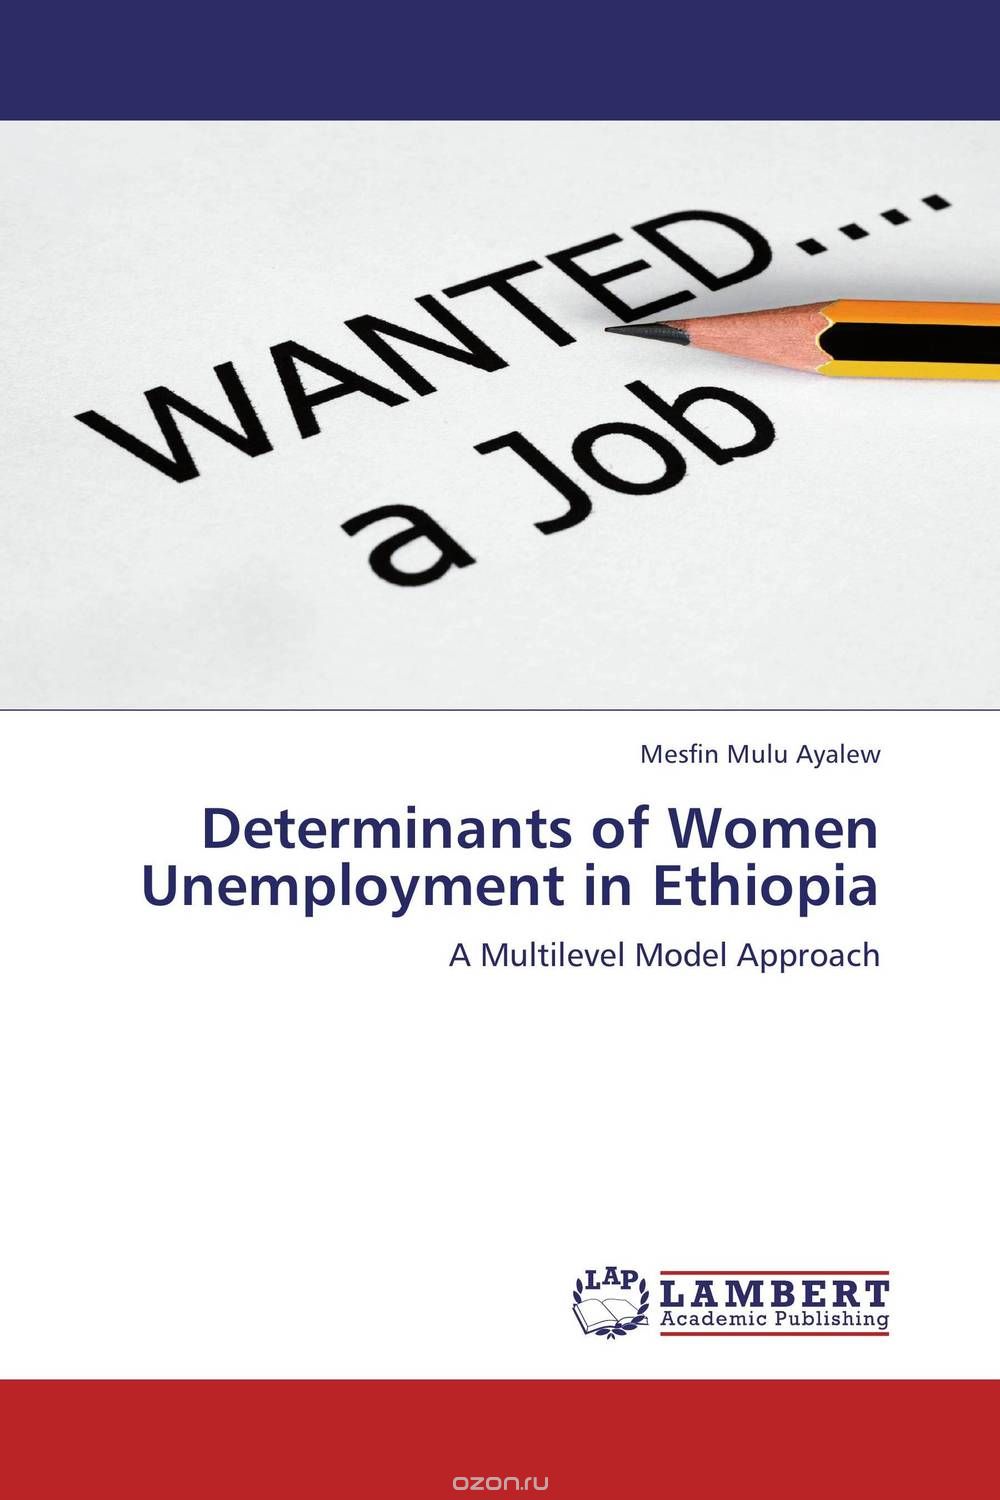 Скачать книгу "Determinants of Women Unemployment in Ethiopia"